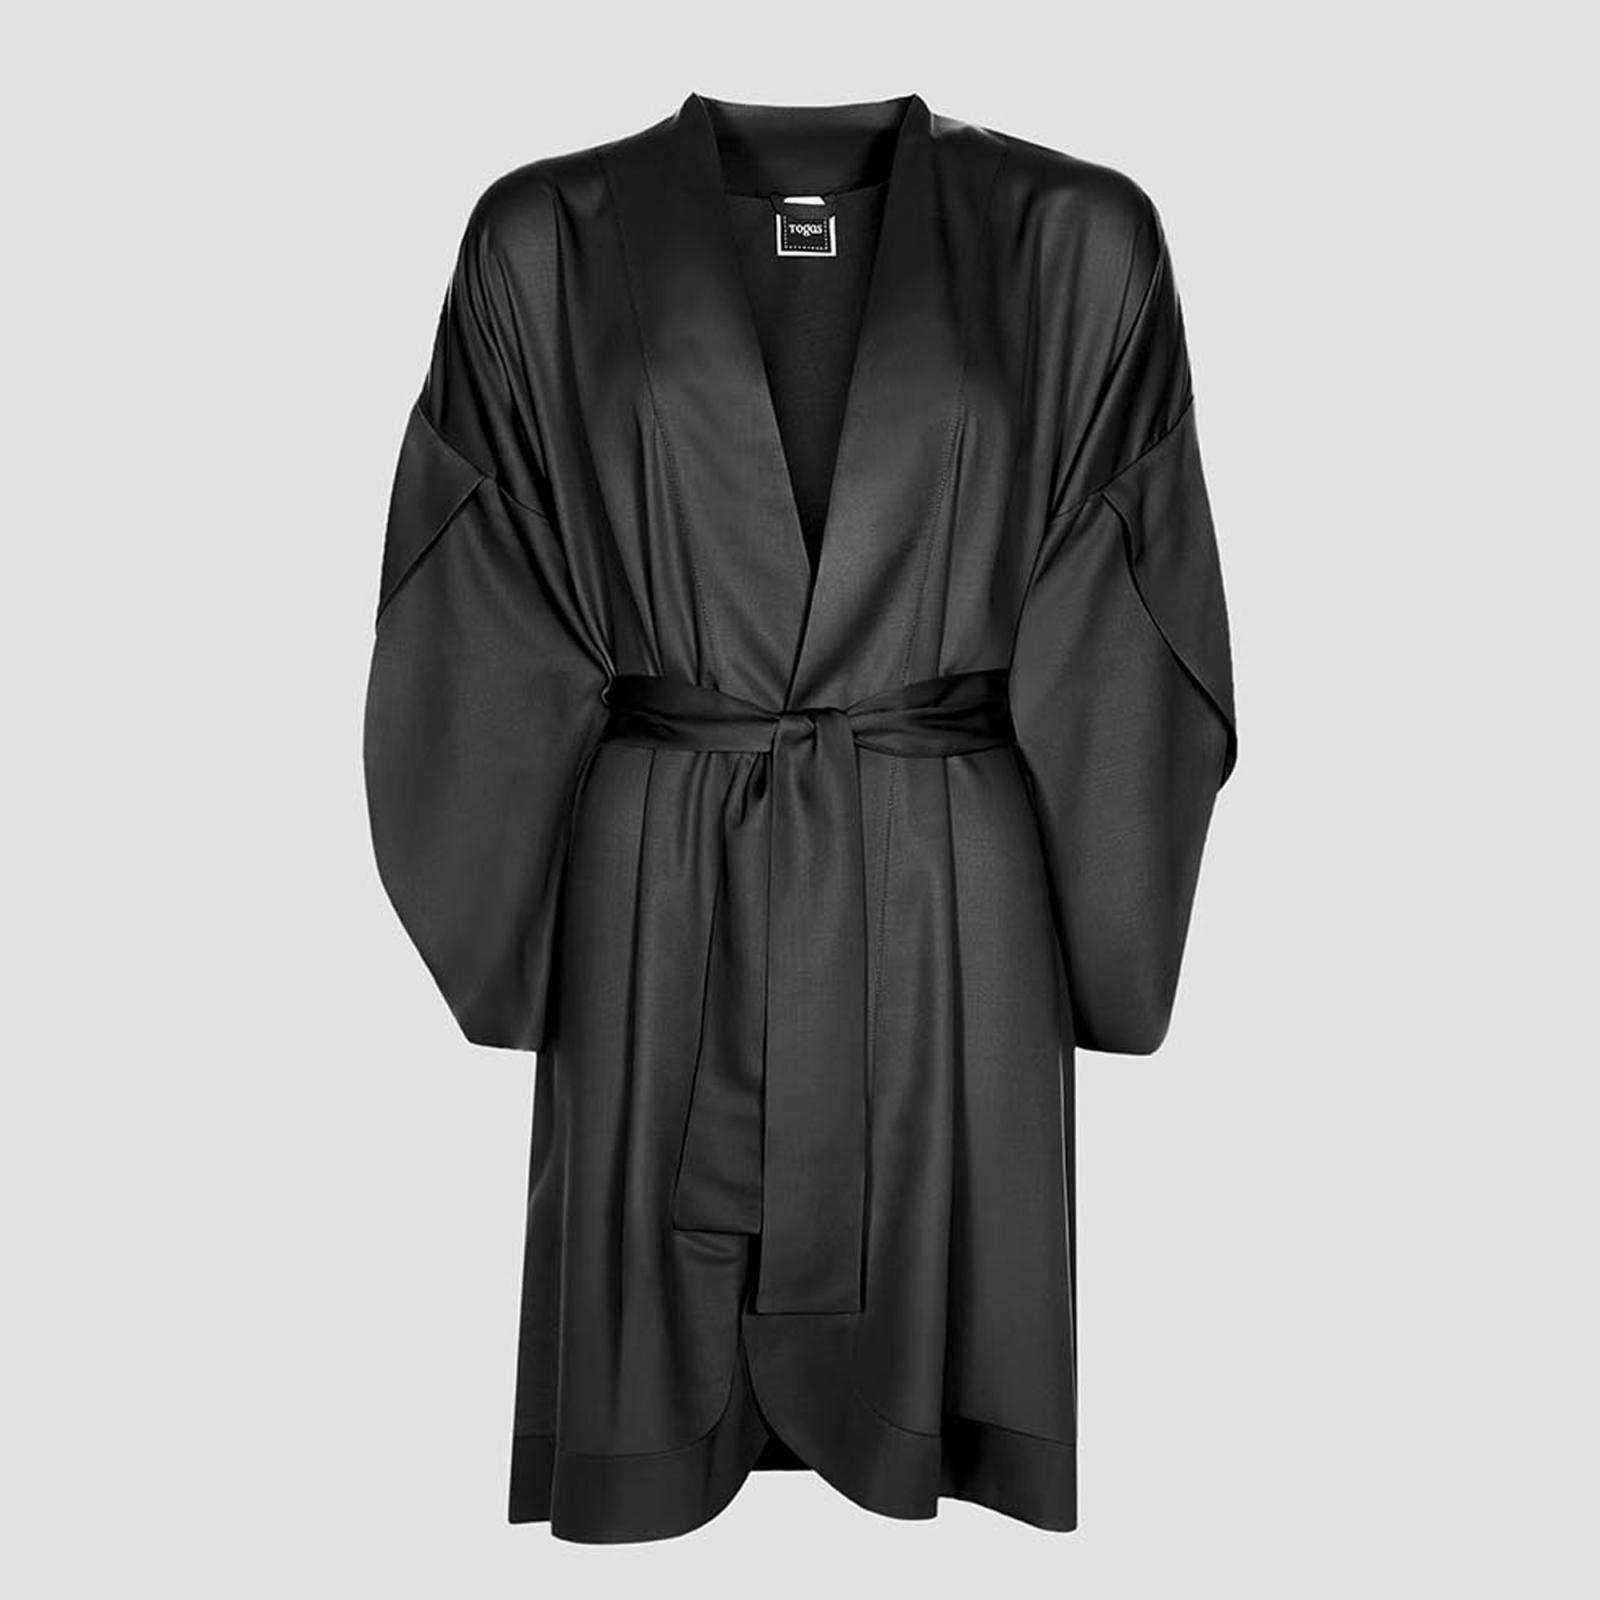 фото Халат-кимоно короткое togas наоми чёрное xxl (52)